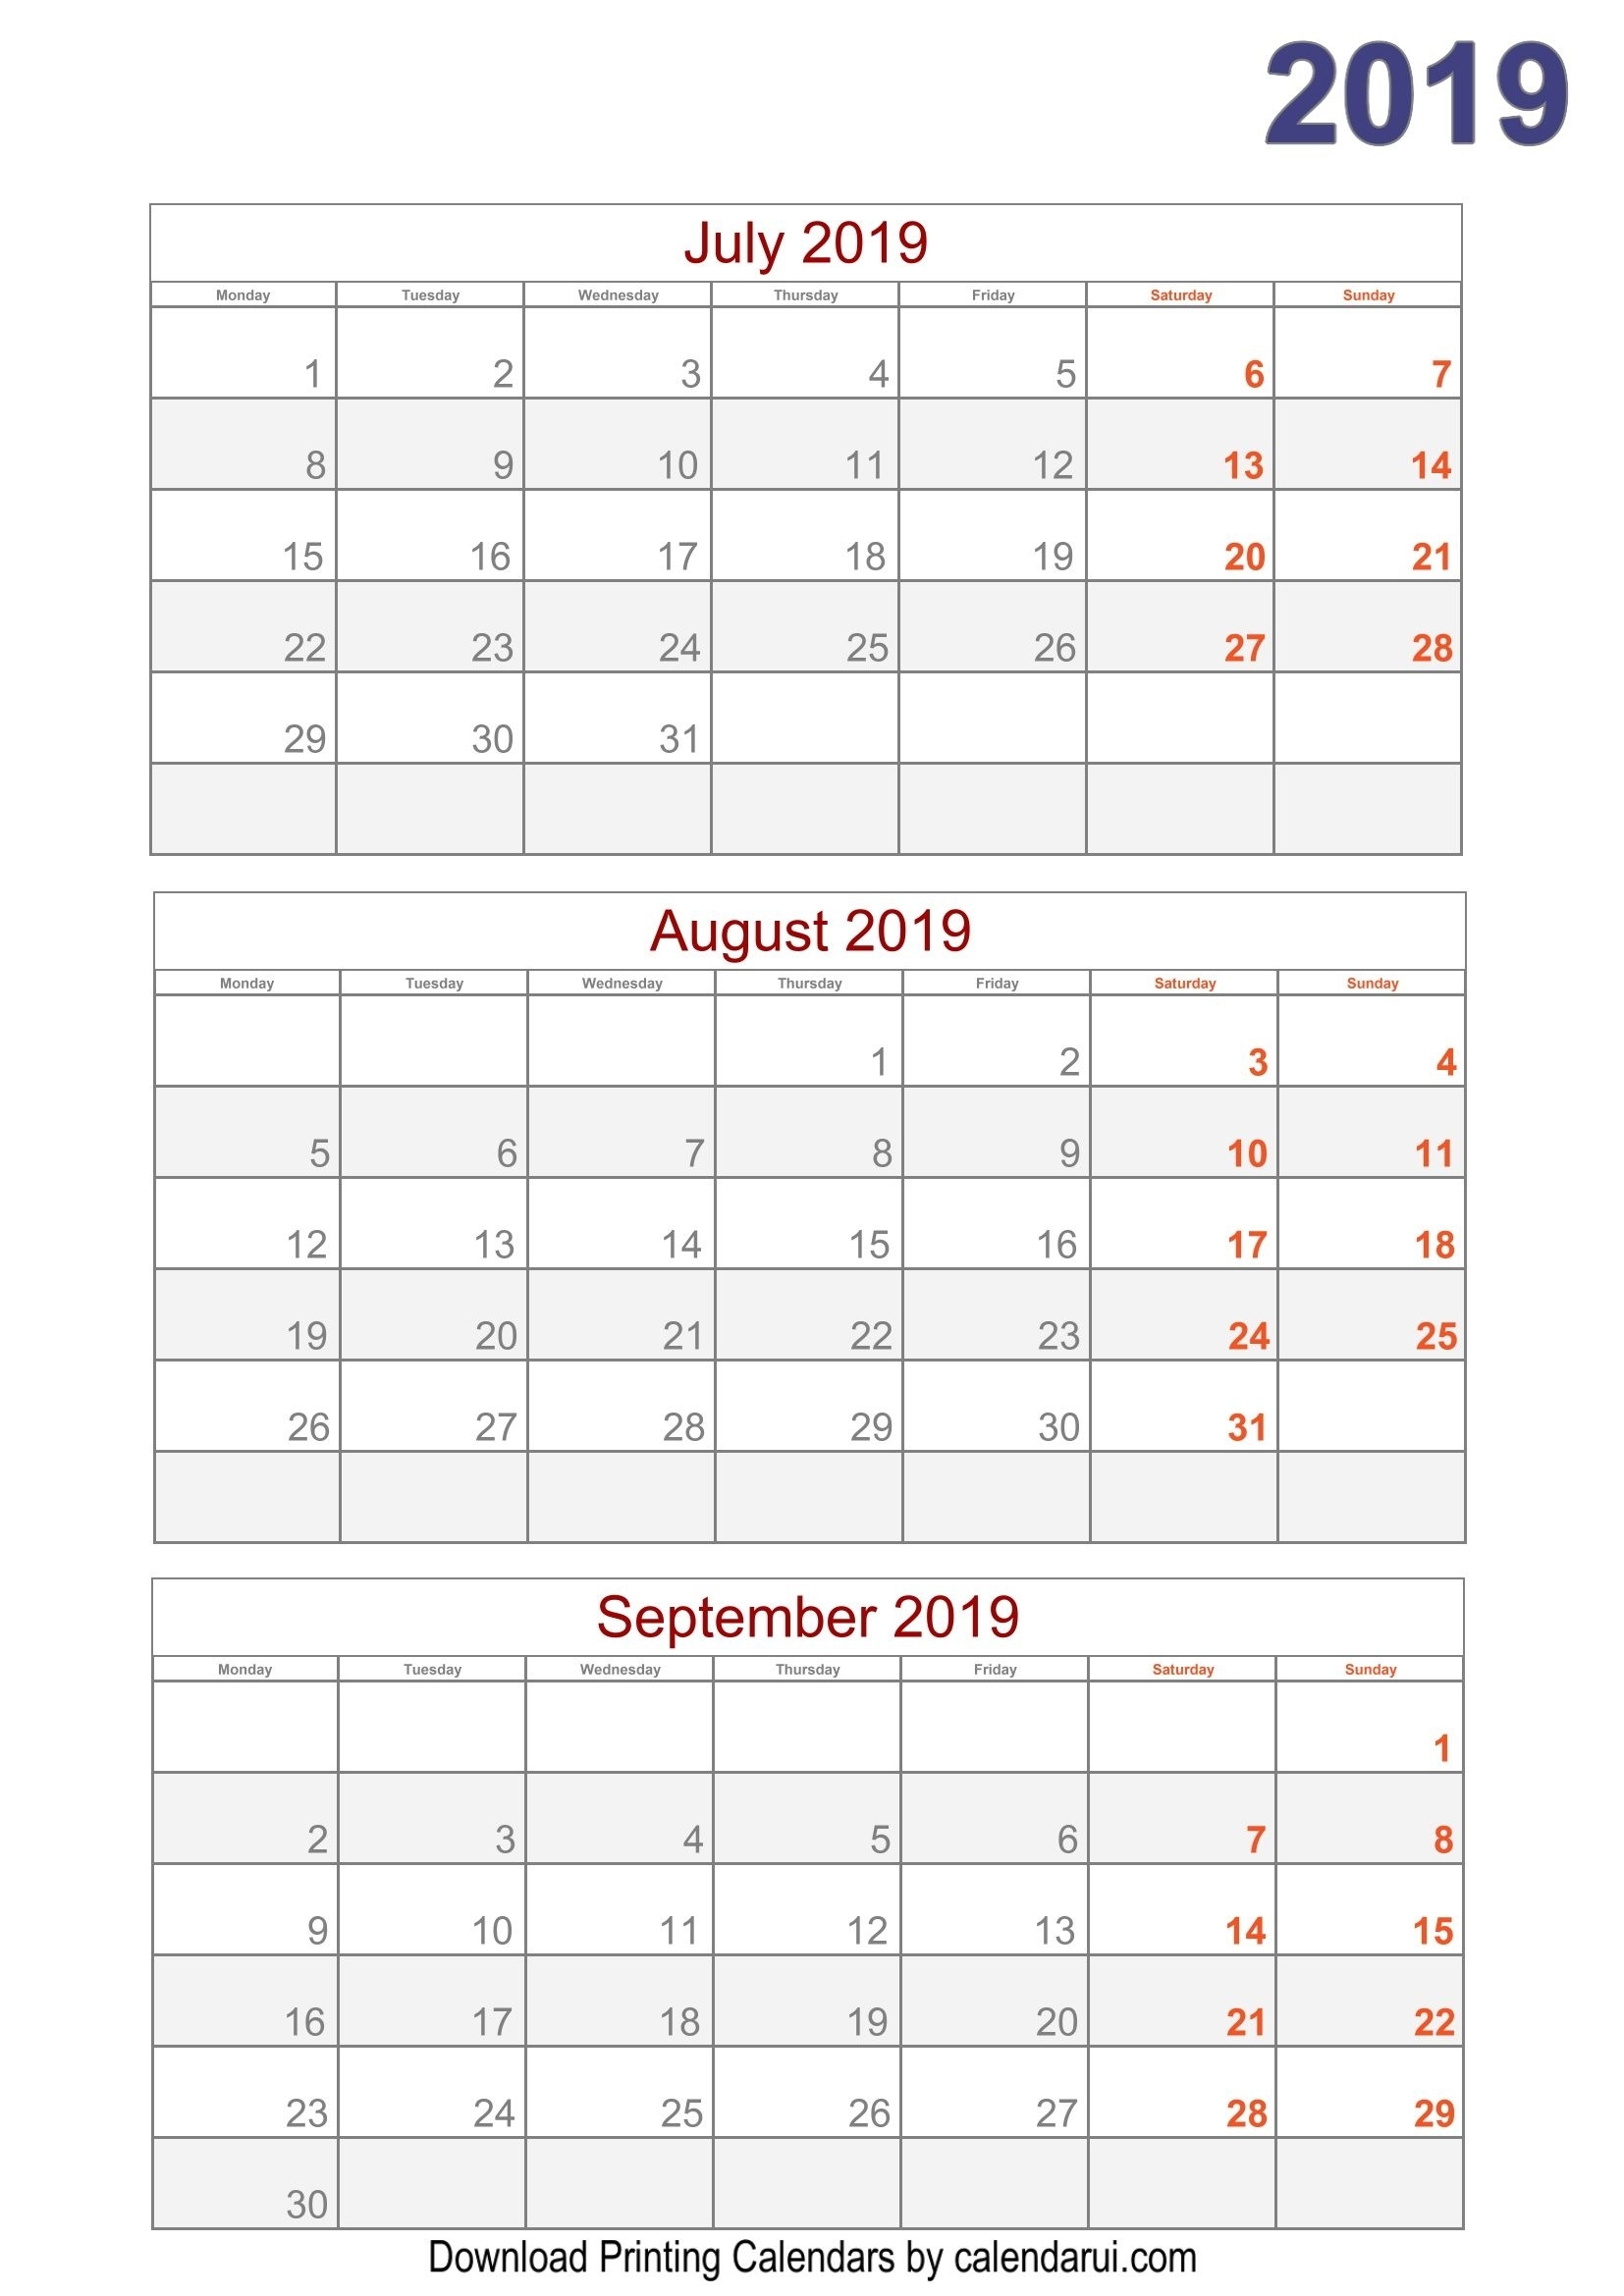 Download 2019 Quarterly Calendar Printable For Free